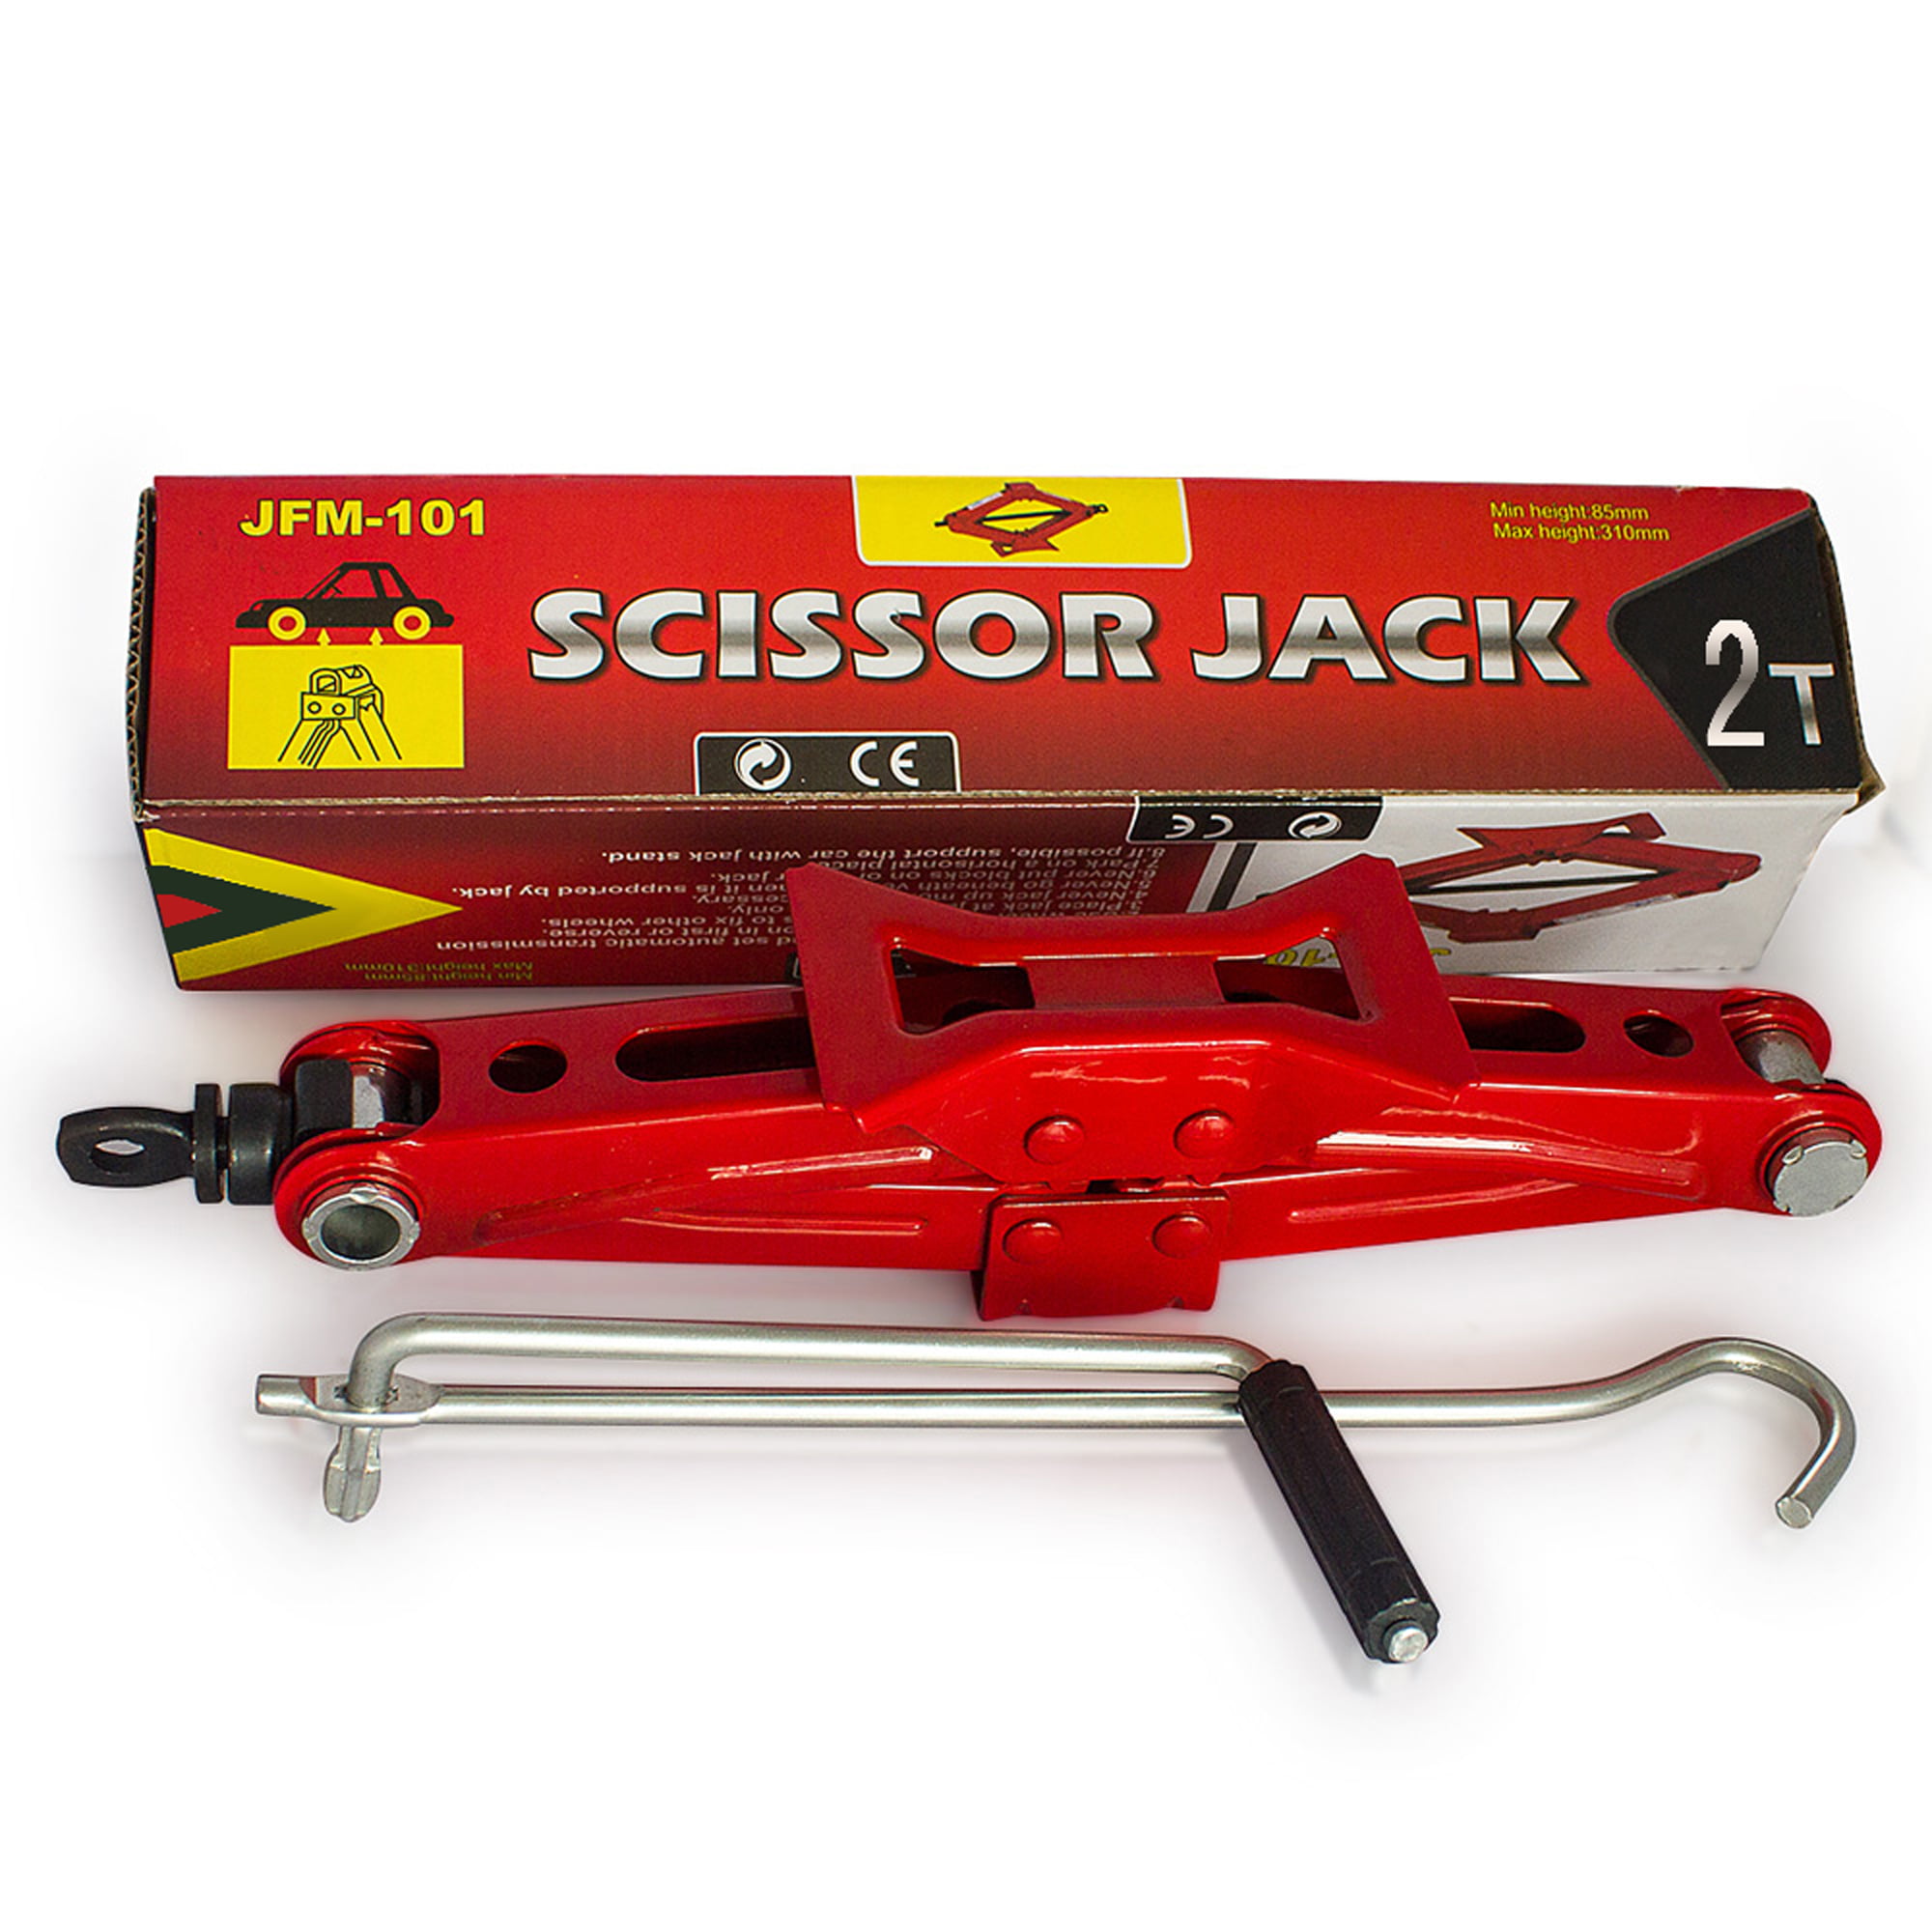 Scissor Jack Lift Wind Up For VAN Car Garage Home Emergency Speed Handle 2 Tonne 